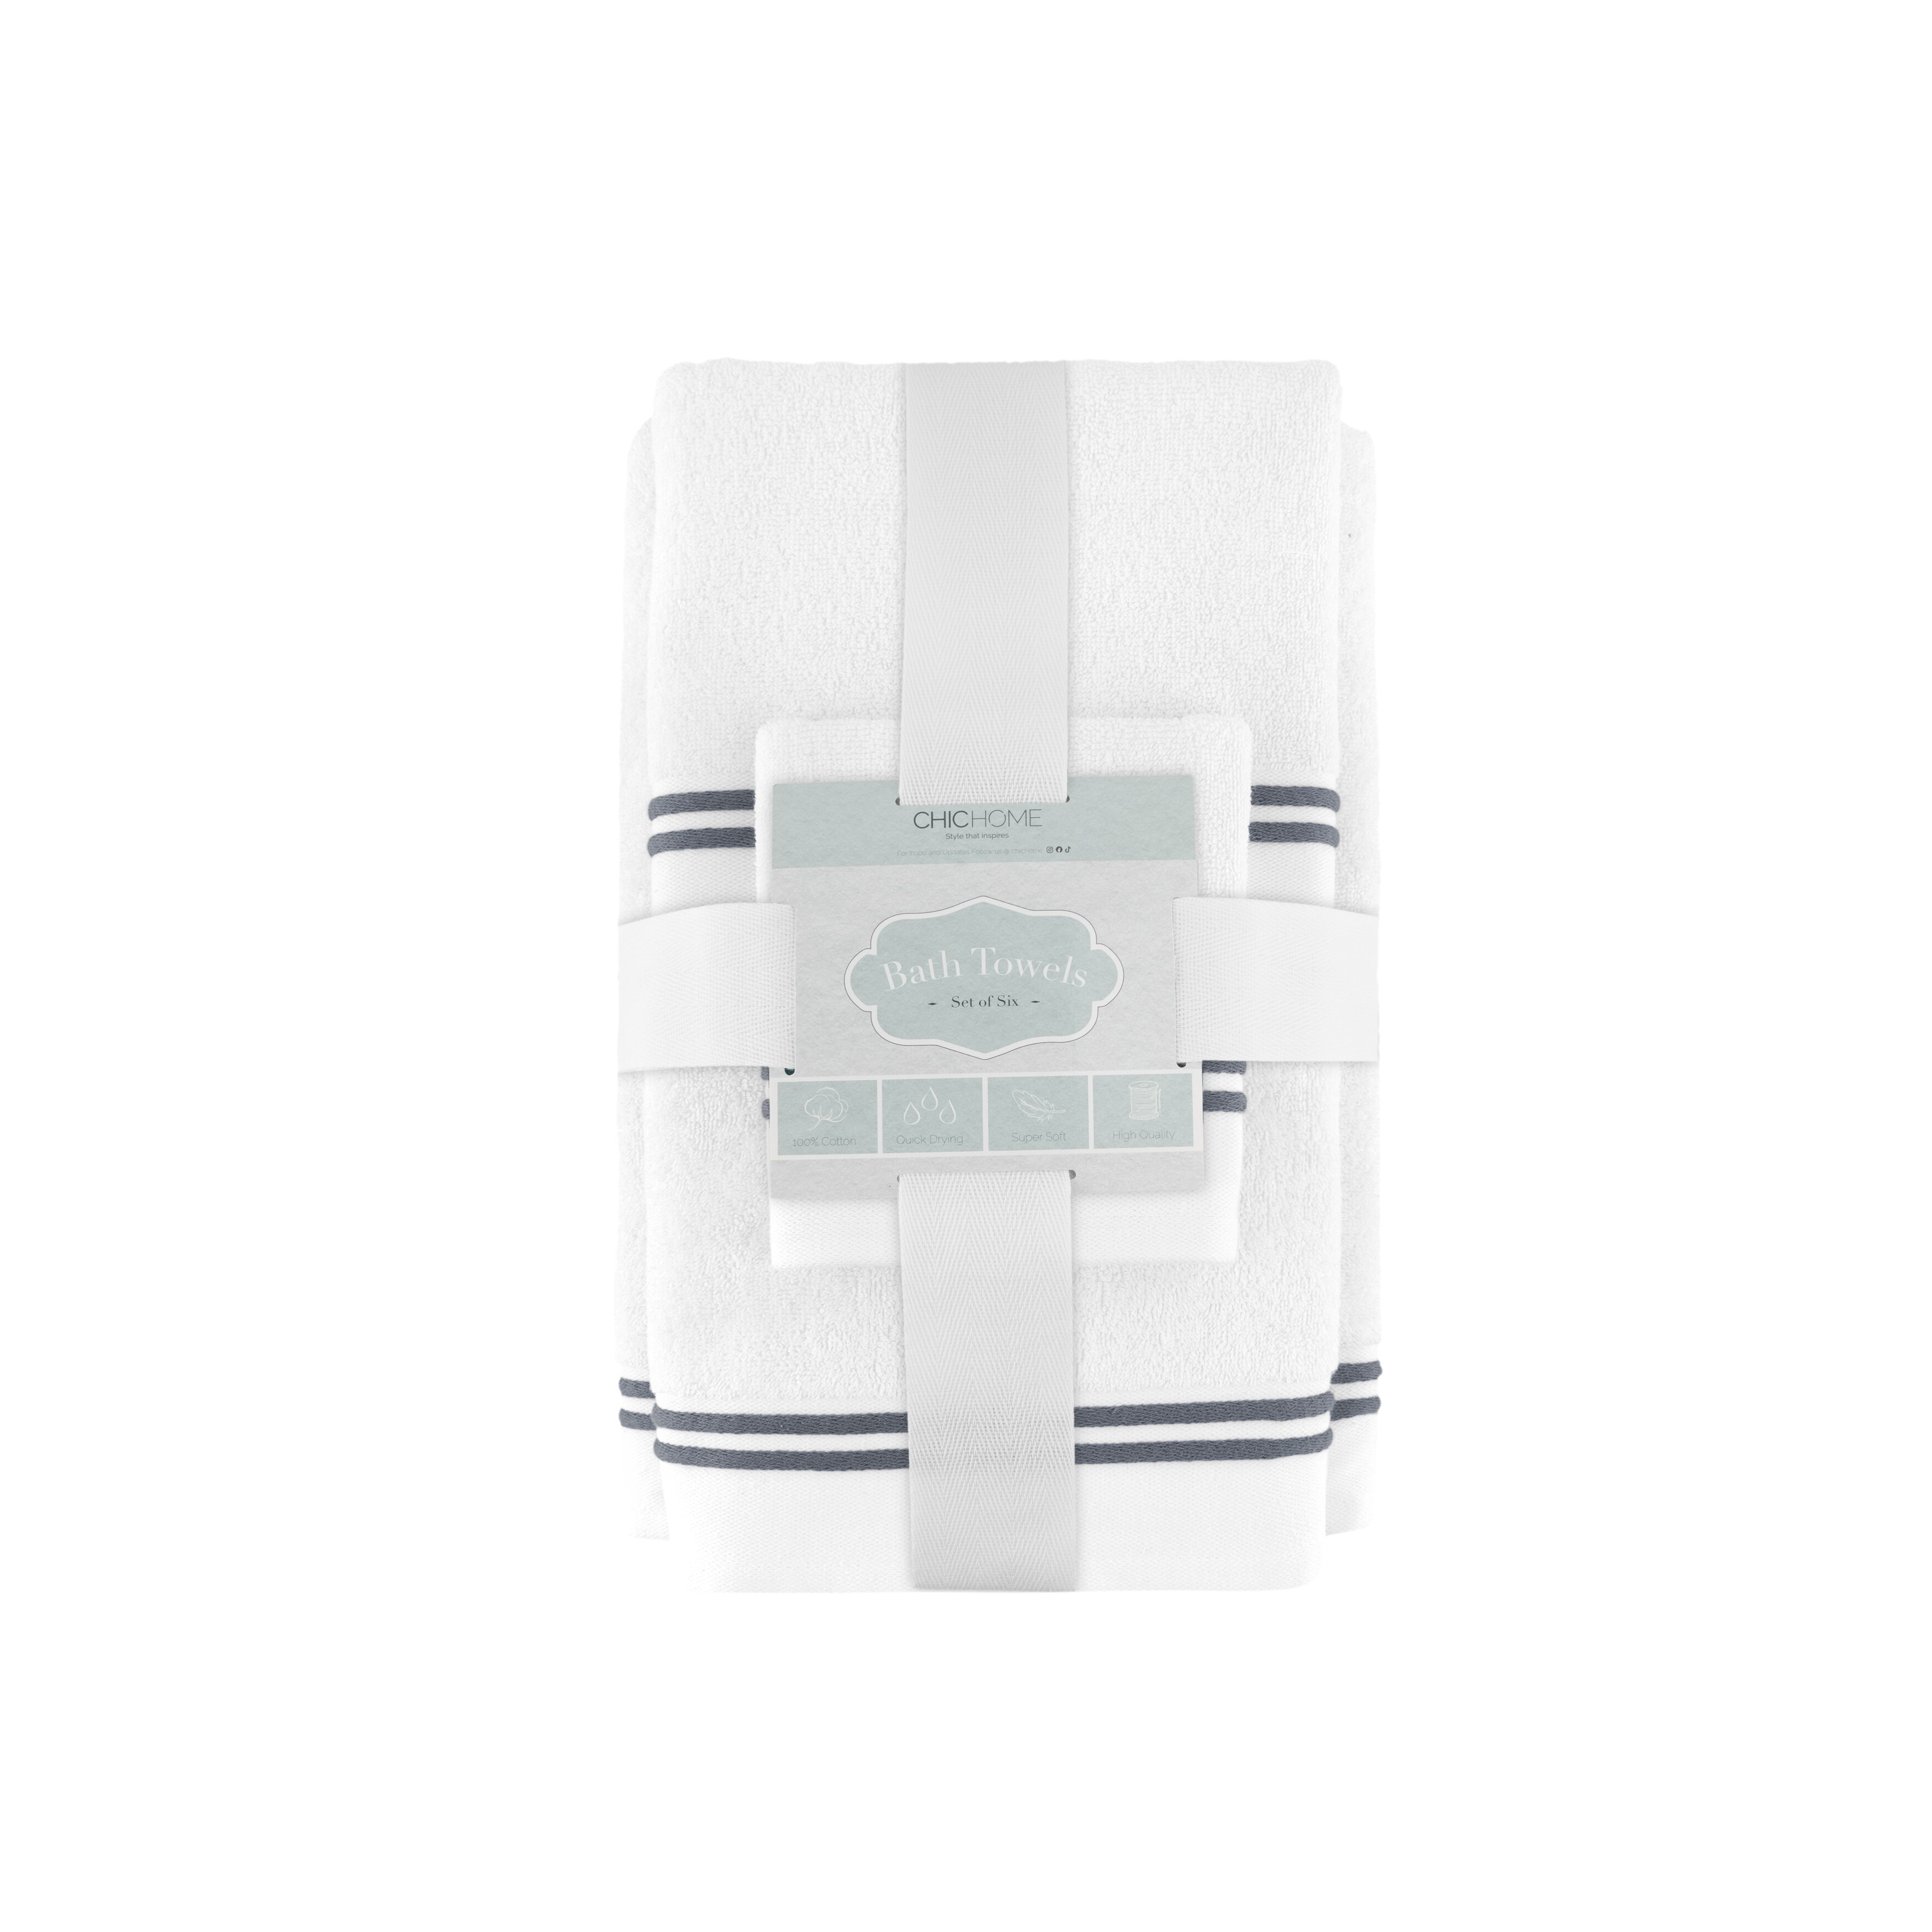 Chic Home 6-Piece Standard 100 Oeko-Tex Certified Towel Set - N/A - On Sale  - Bed Bath & Beyond - 38353933